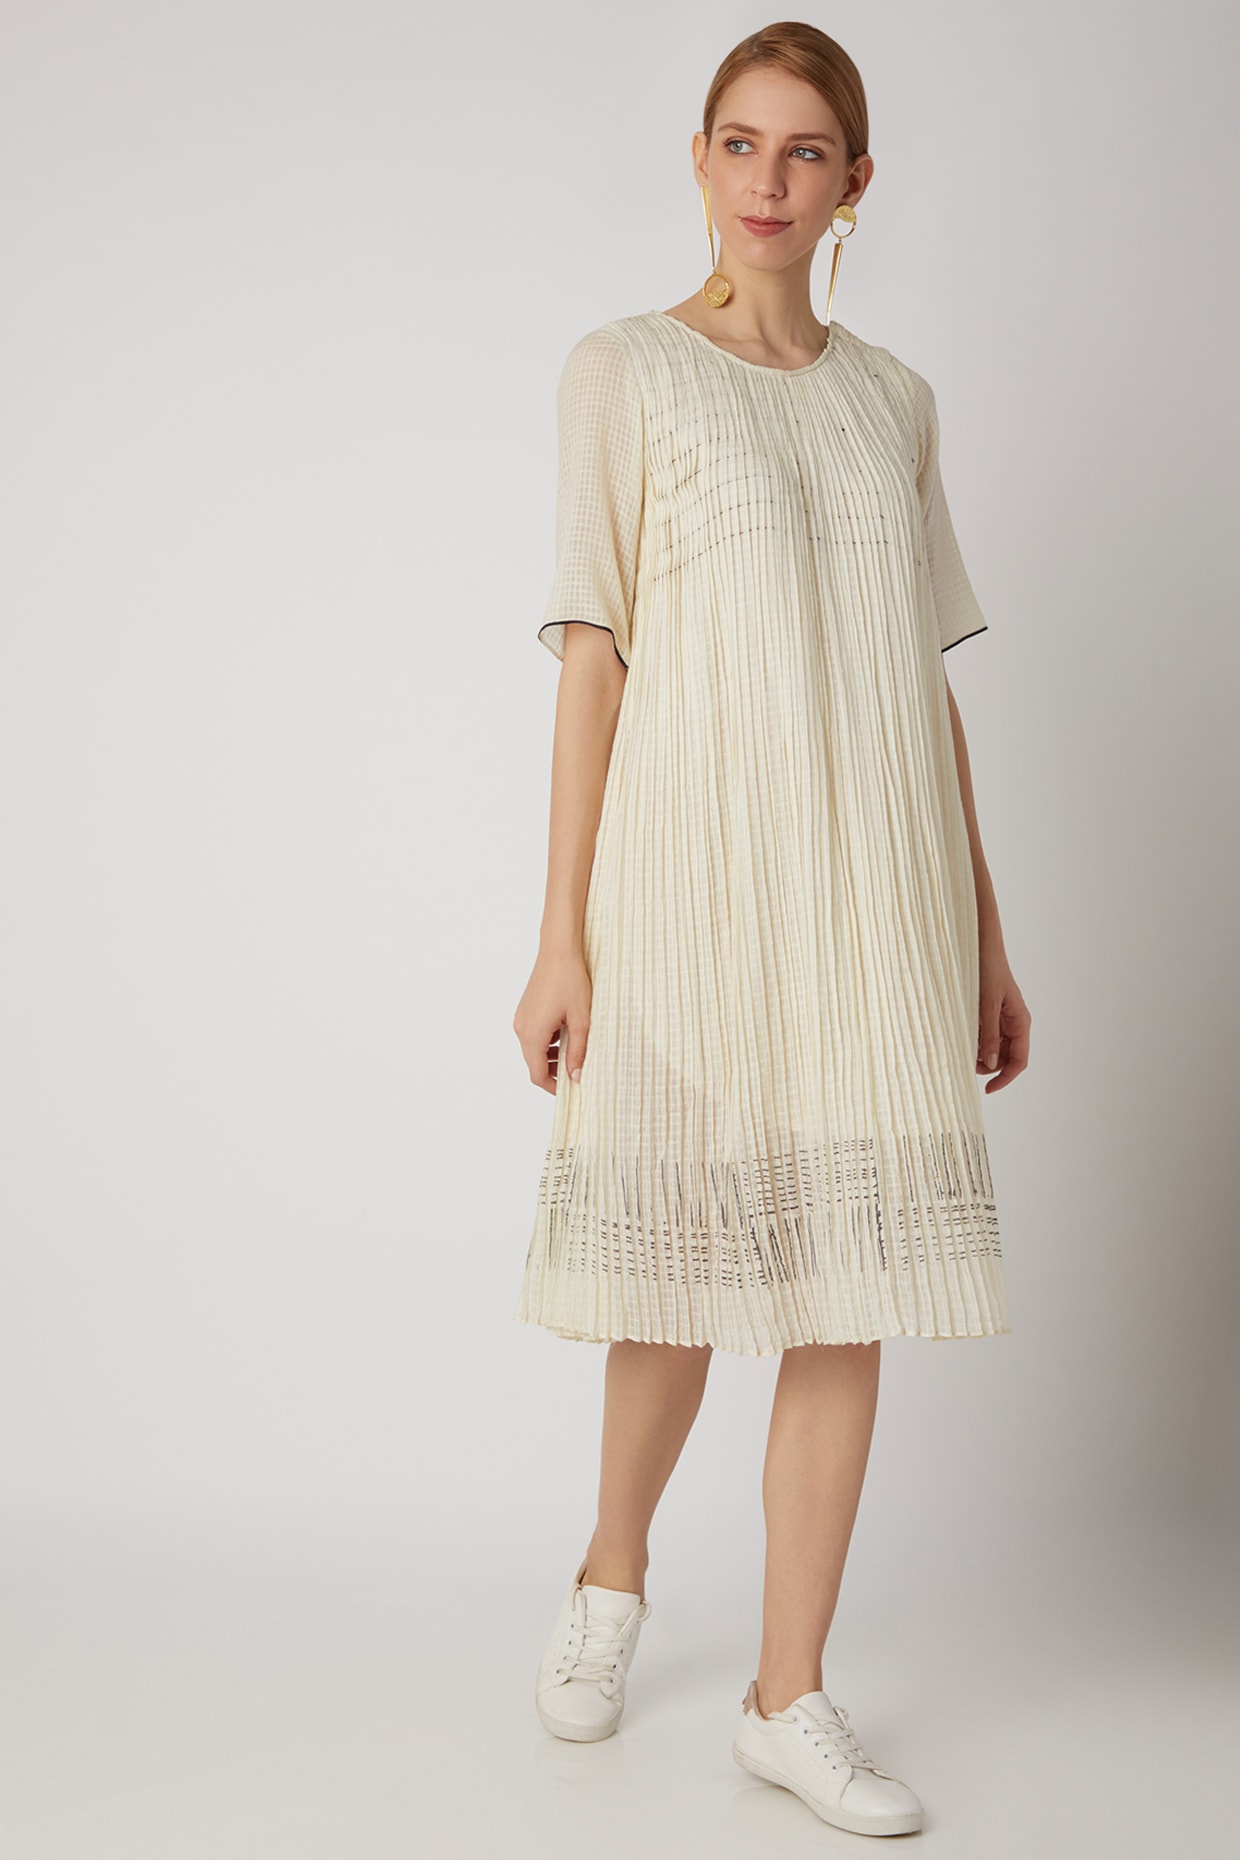 Bil Bebrejde røg White Organic Cotton Dress Design by Urvashi Kaur at Pernia's Pop Up Shop  2021